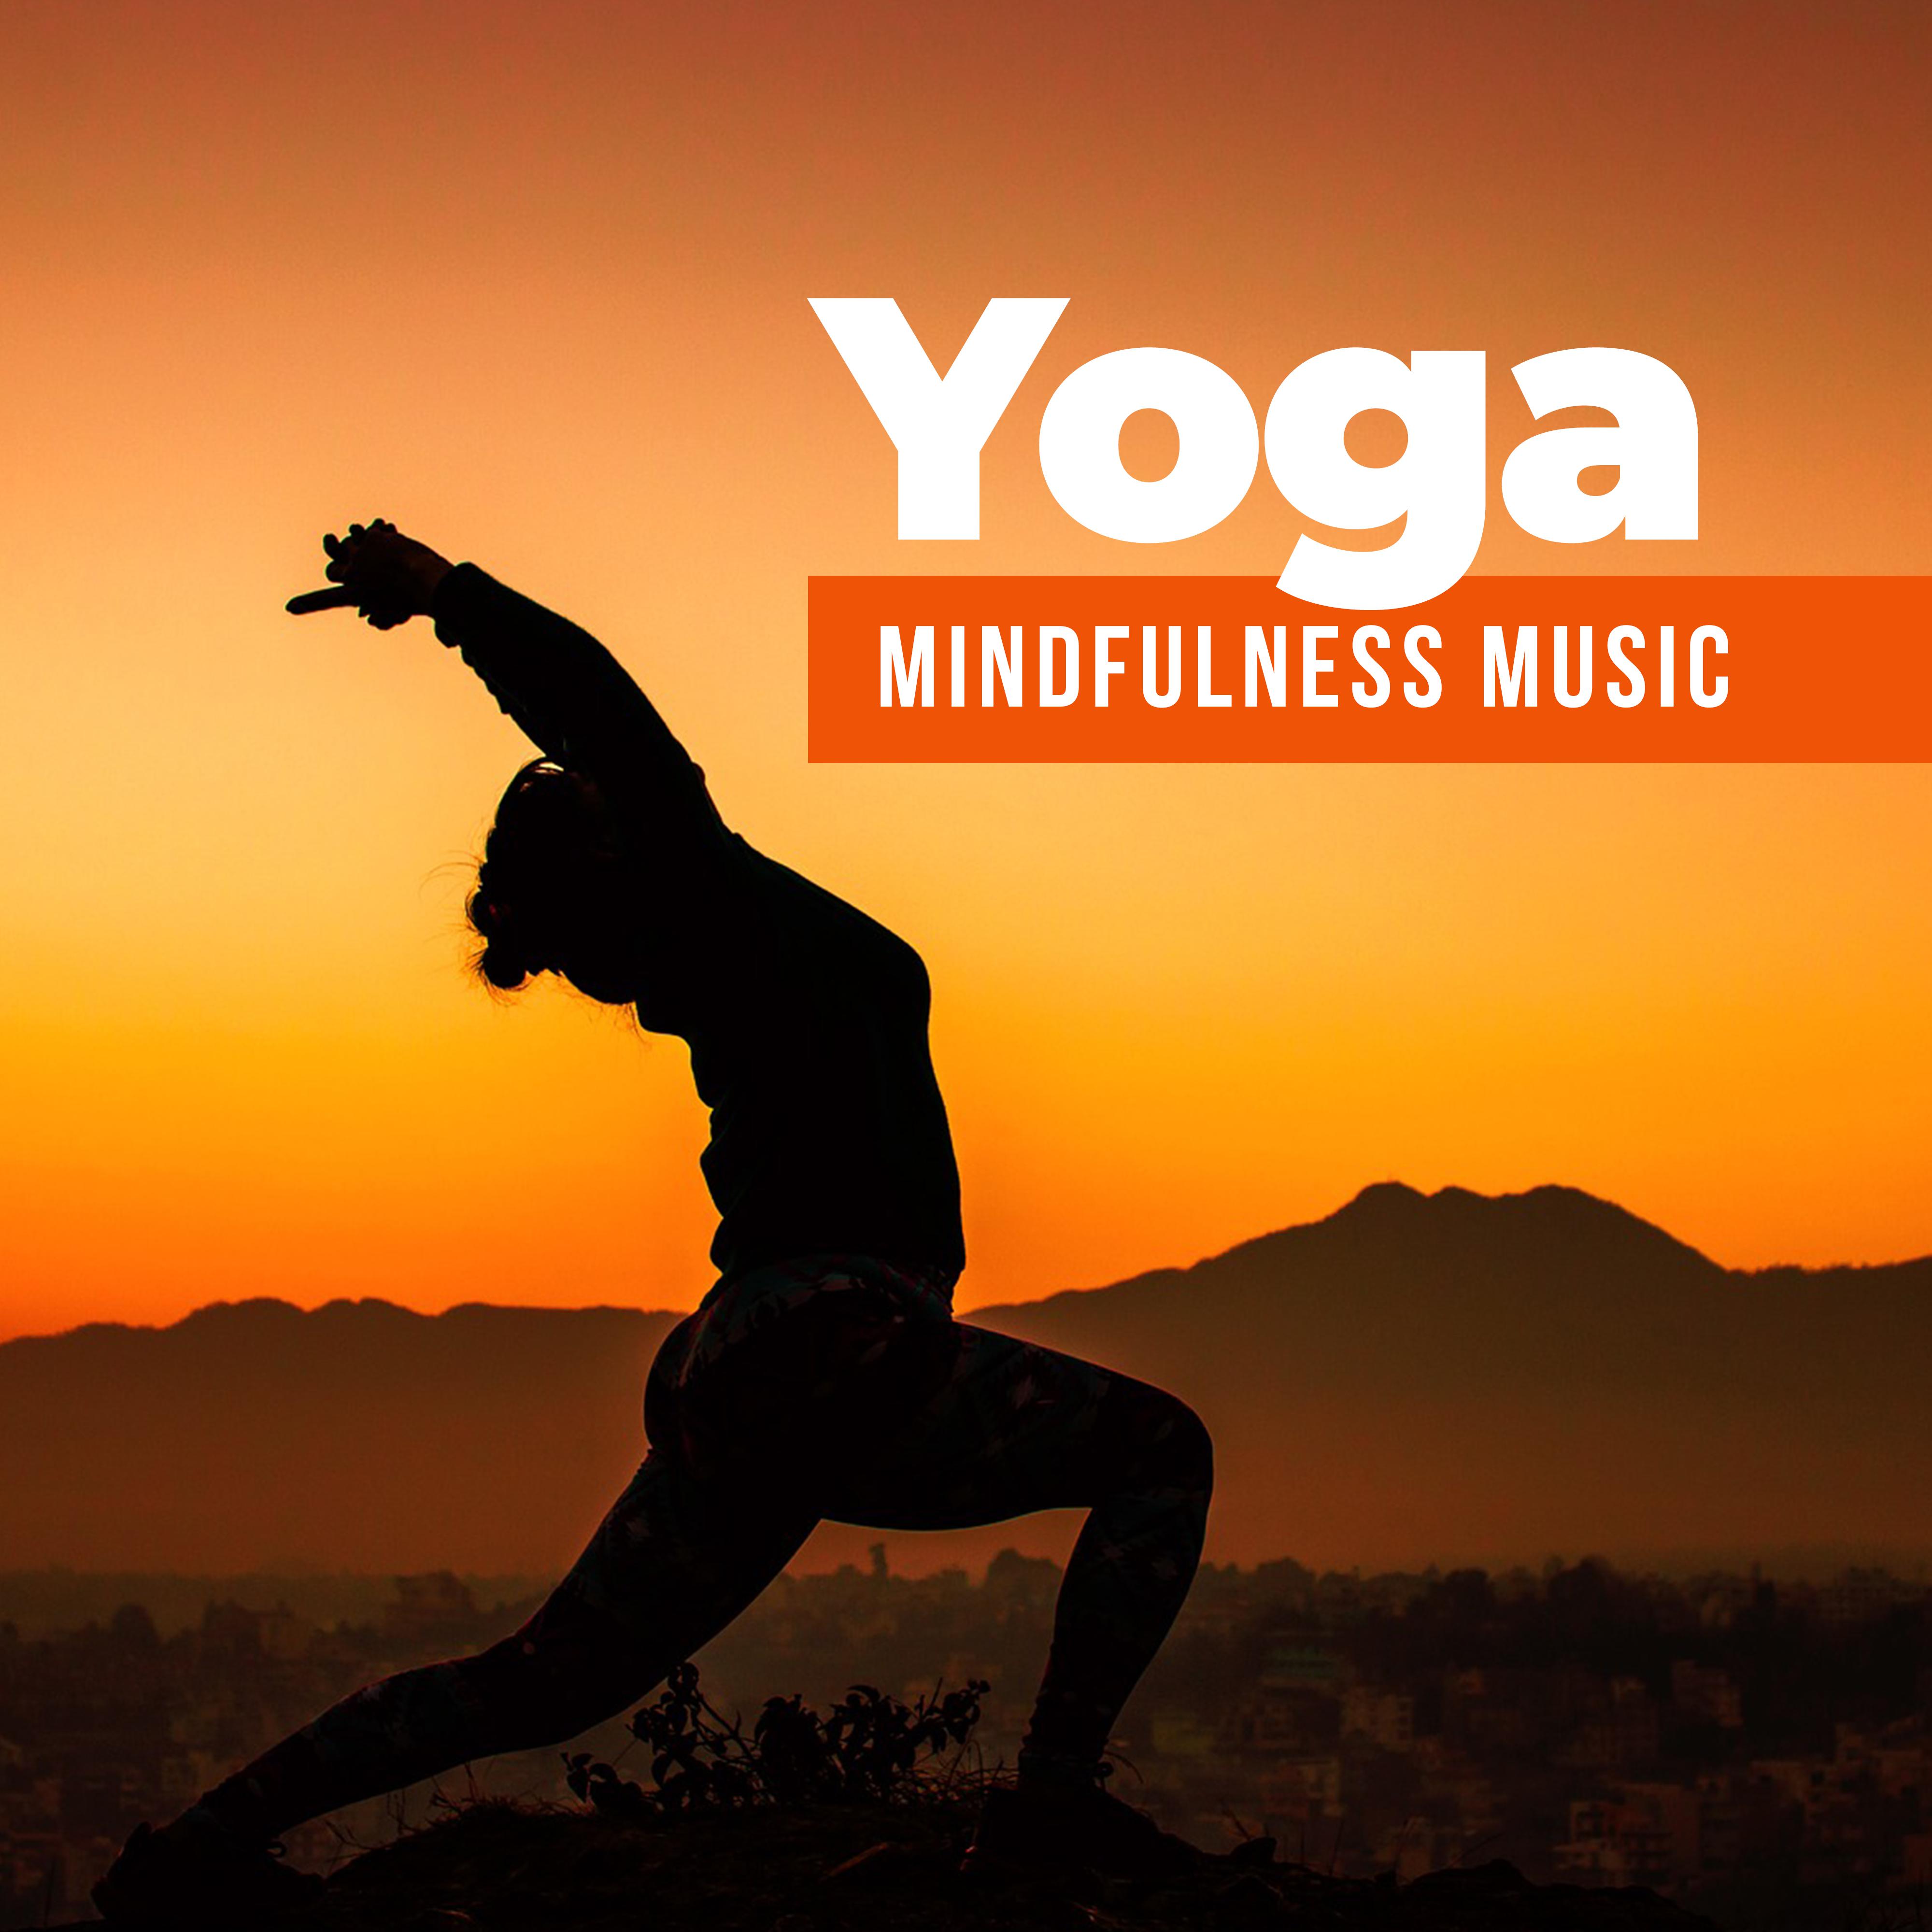 Yoga: Mindfulness Music